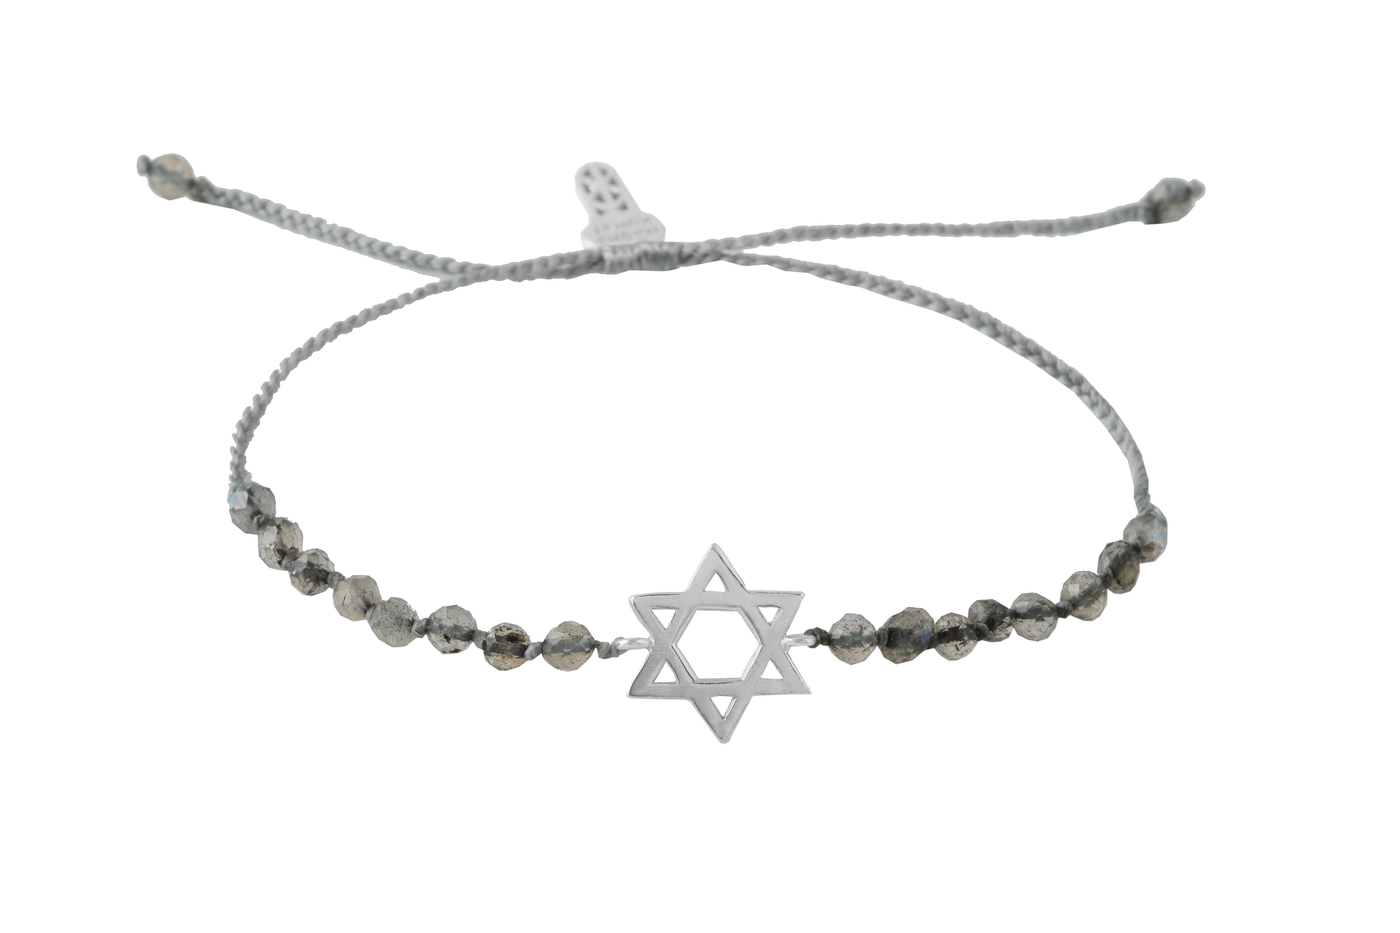 David star talisman bracelet with beads. Silver